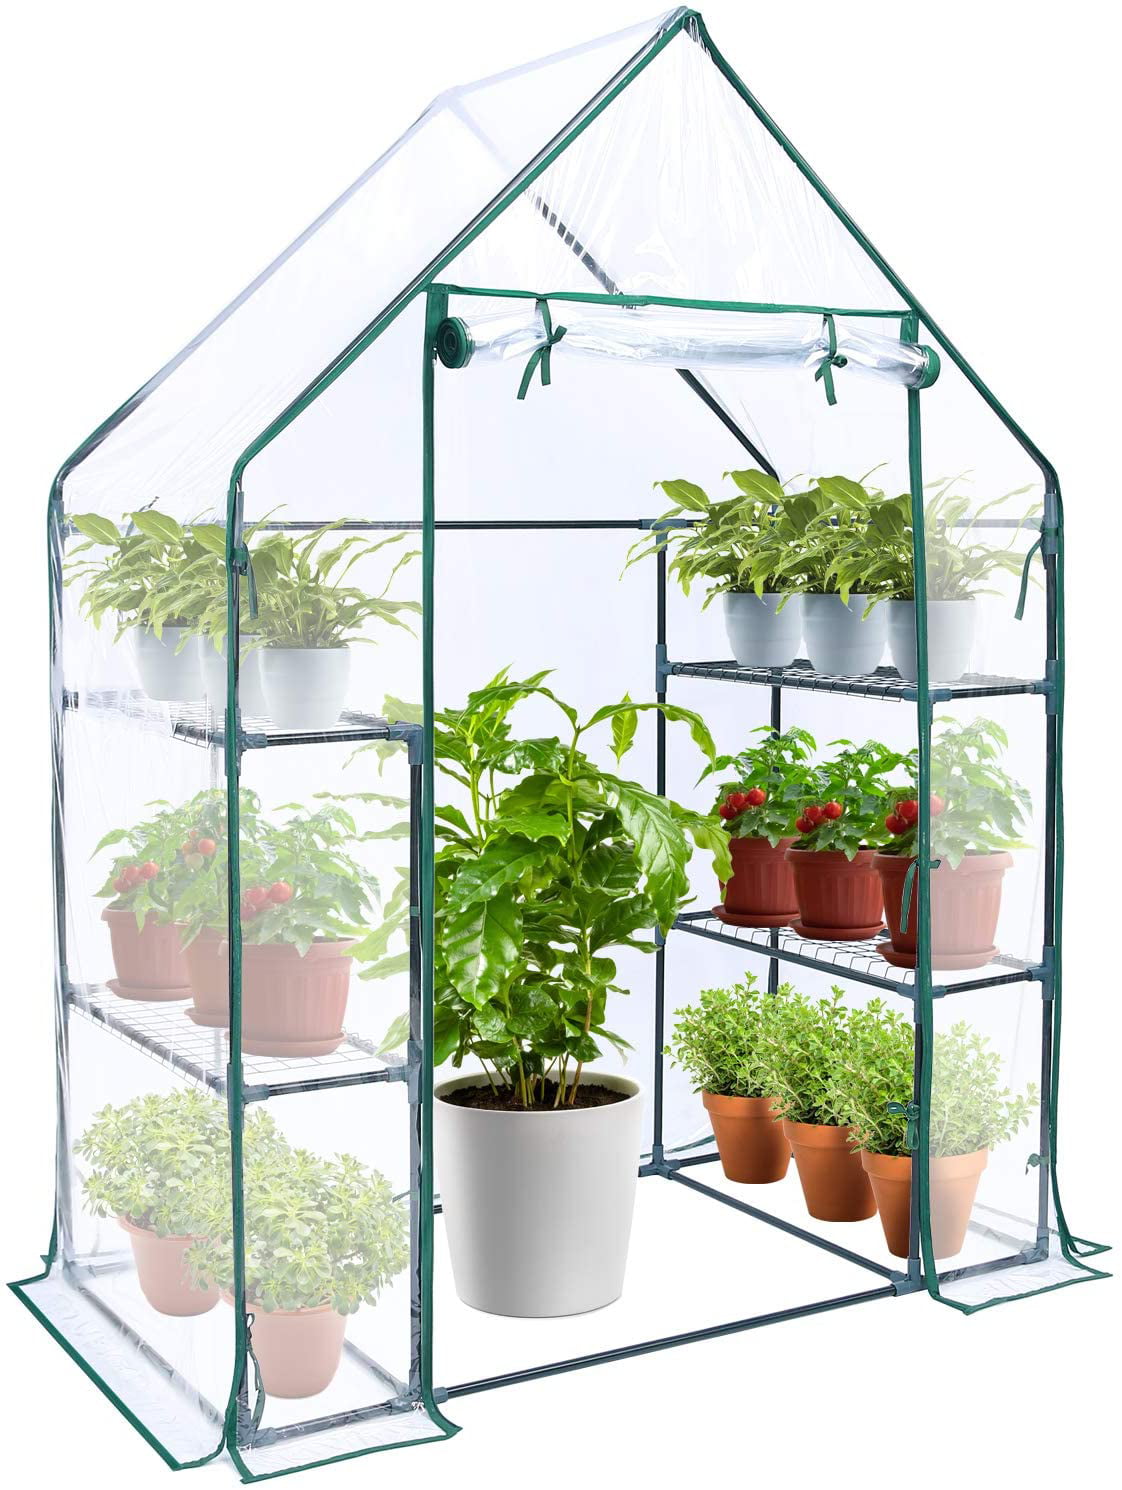 6 Shelves Greenhouse Portable Mini Walk In Outdoor MINI Planter House 3 Tiers 